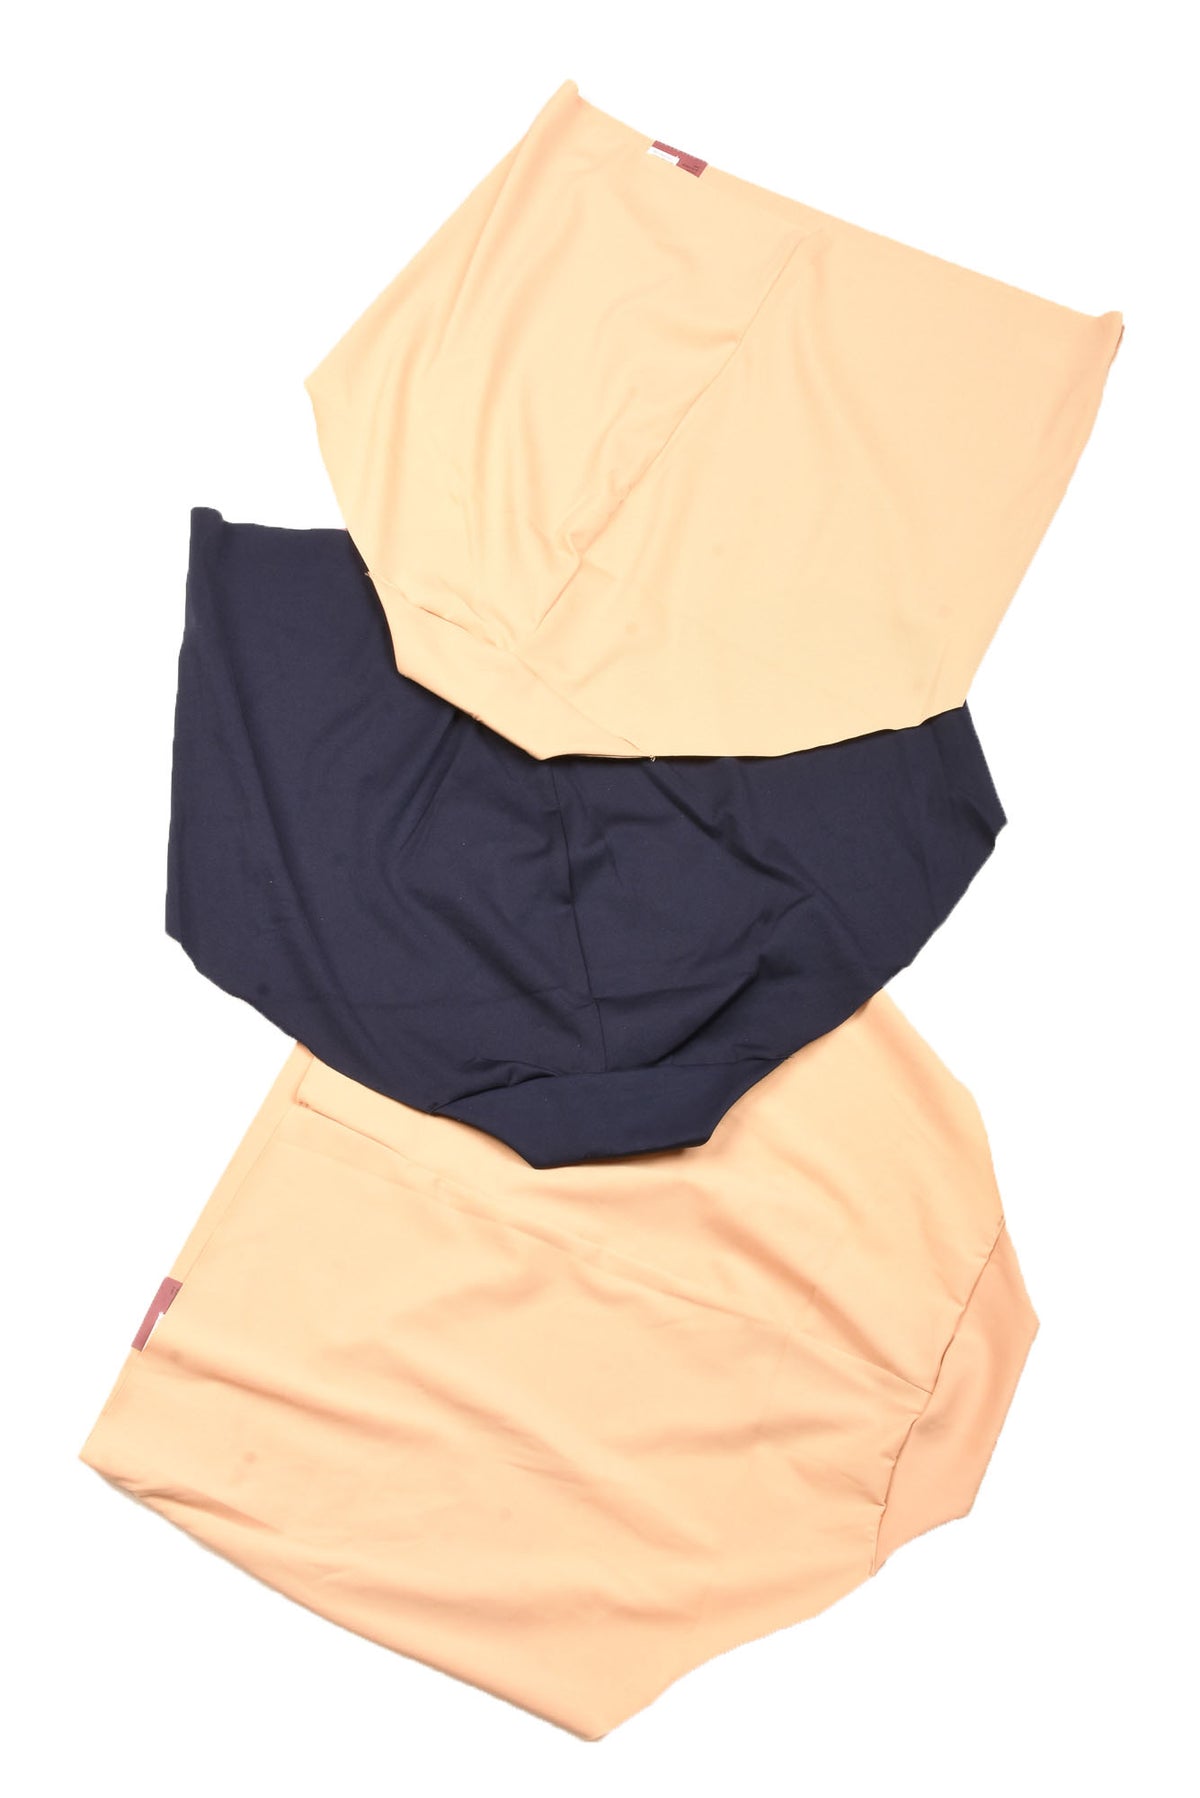 Cacique Size 26/28 Women's Plus Underwear - Your Designer Thrift